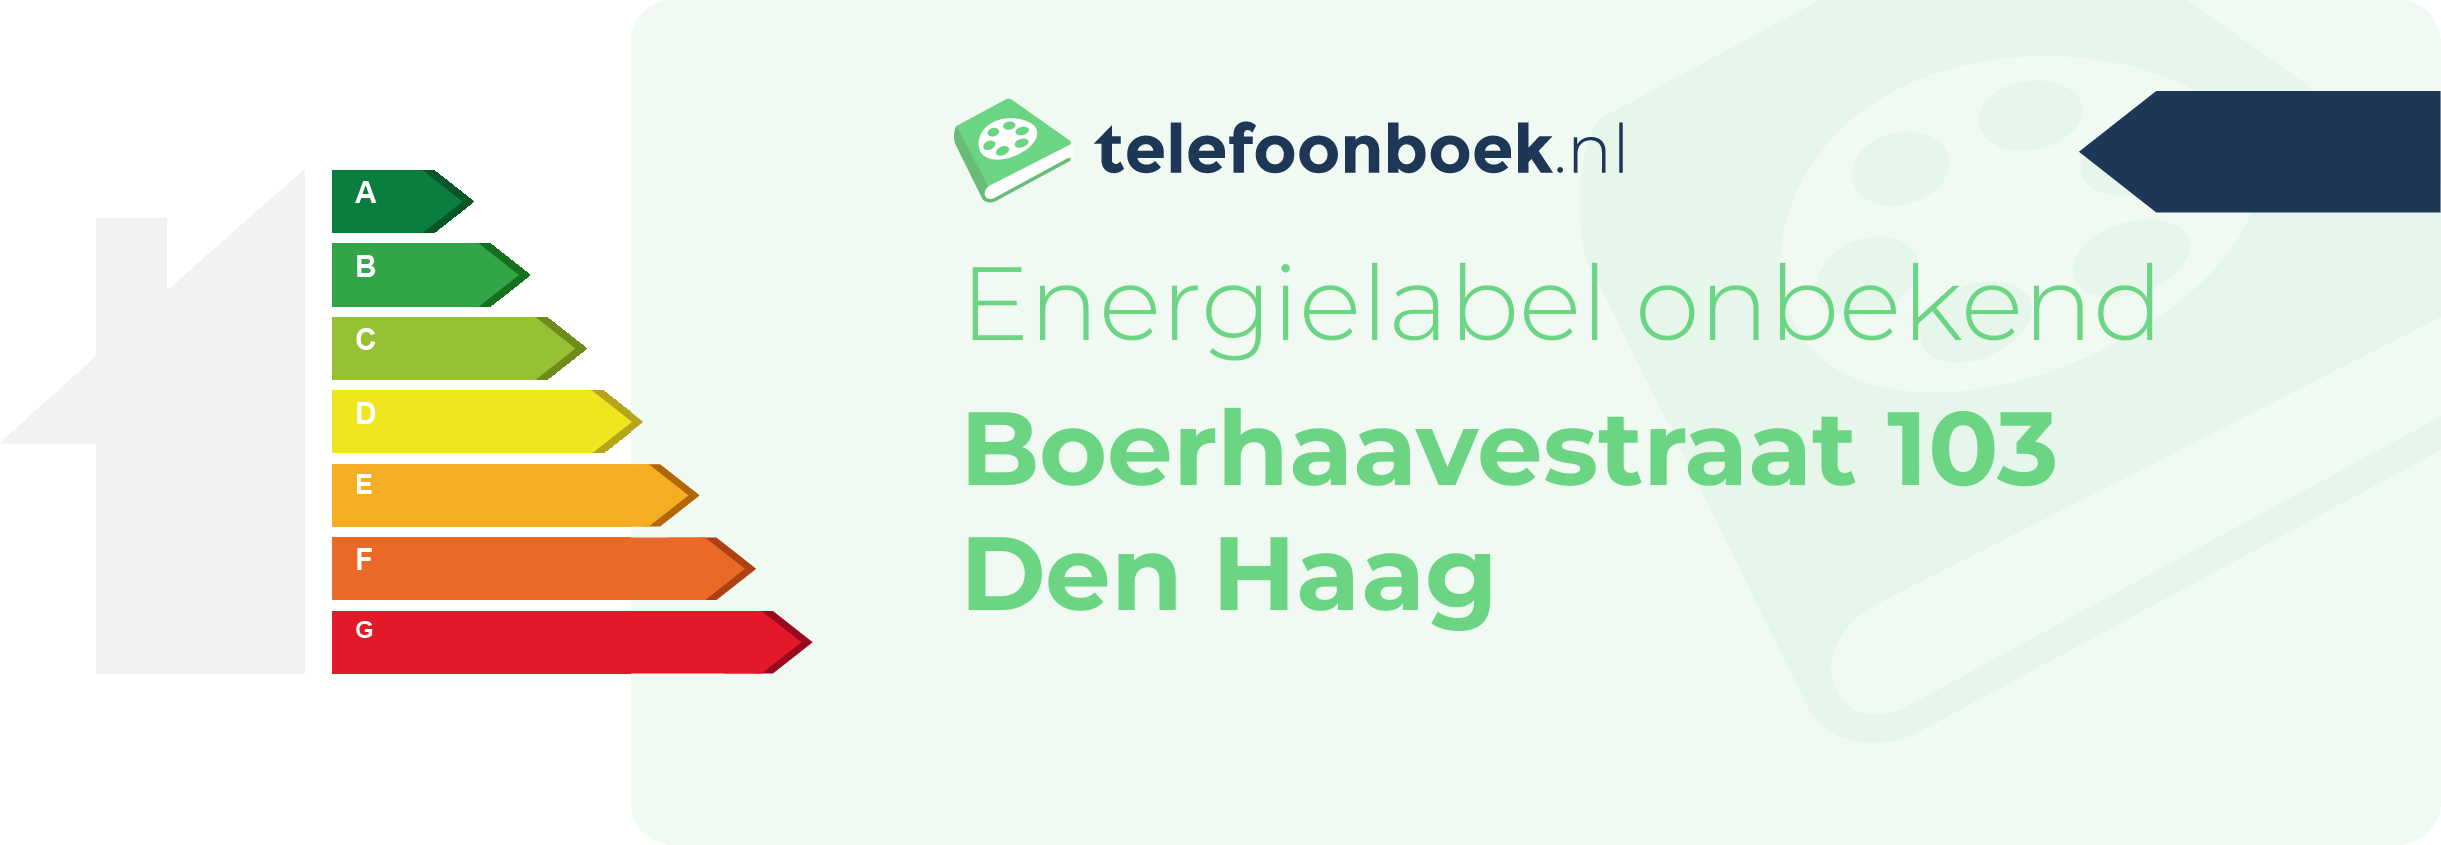 Energielabel Boerhaavestraat 103 Den Haag